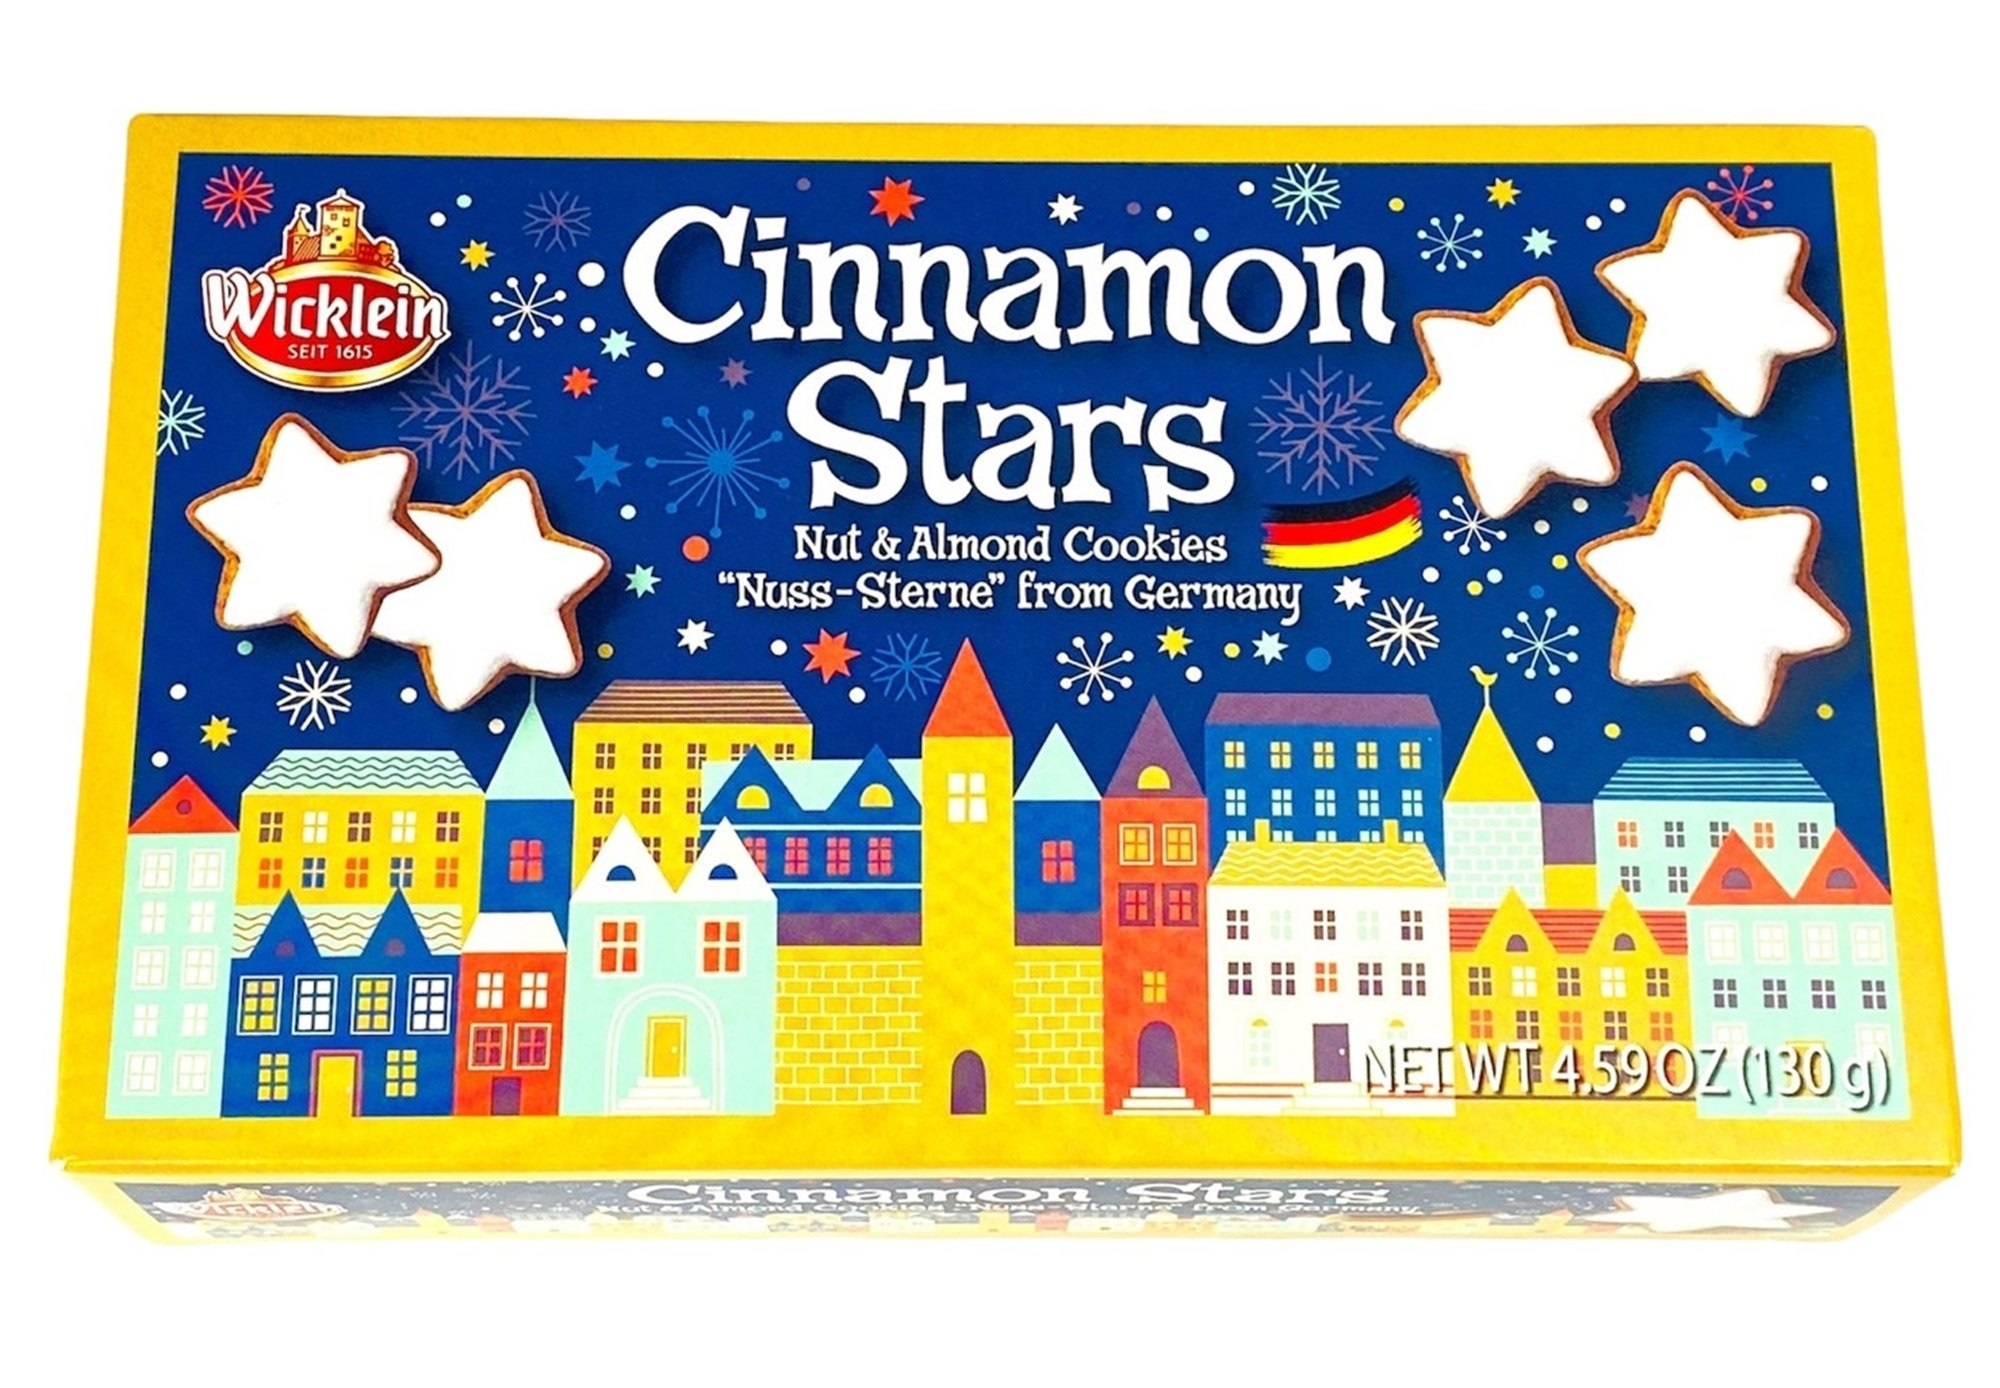 Wicklein Cinnamon Stars